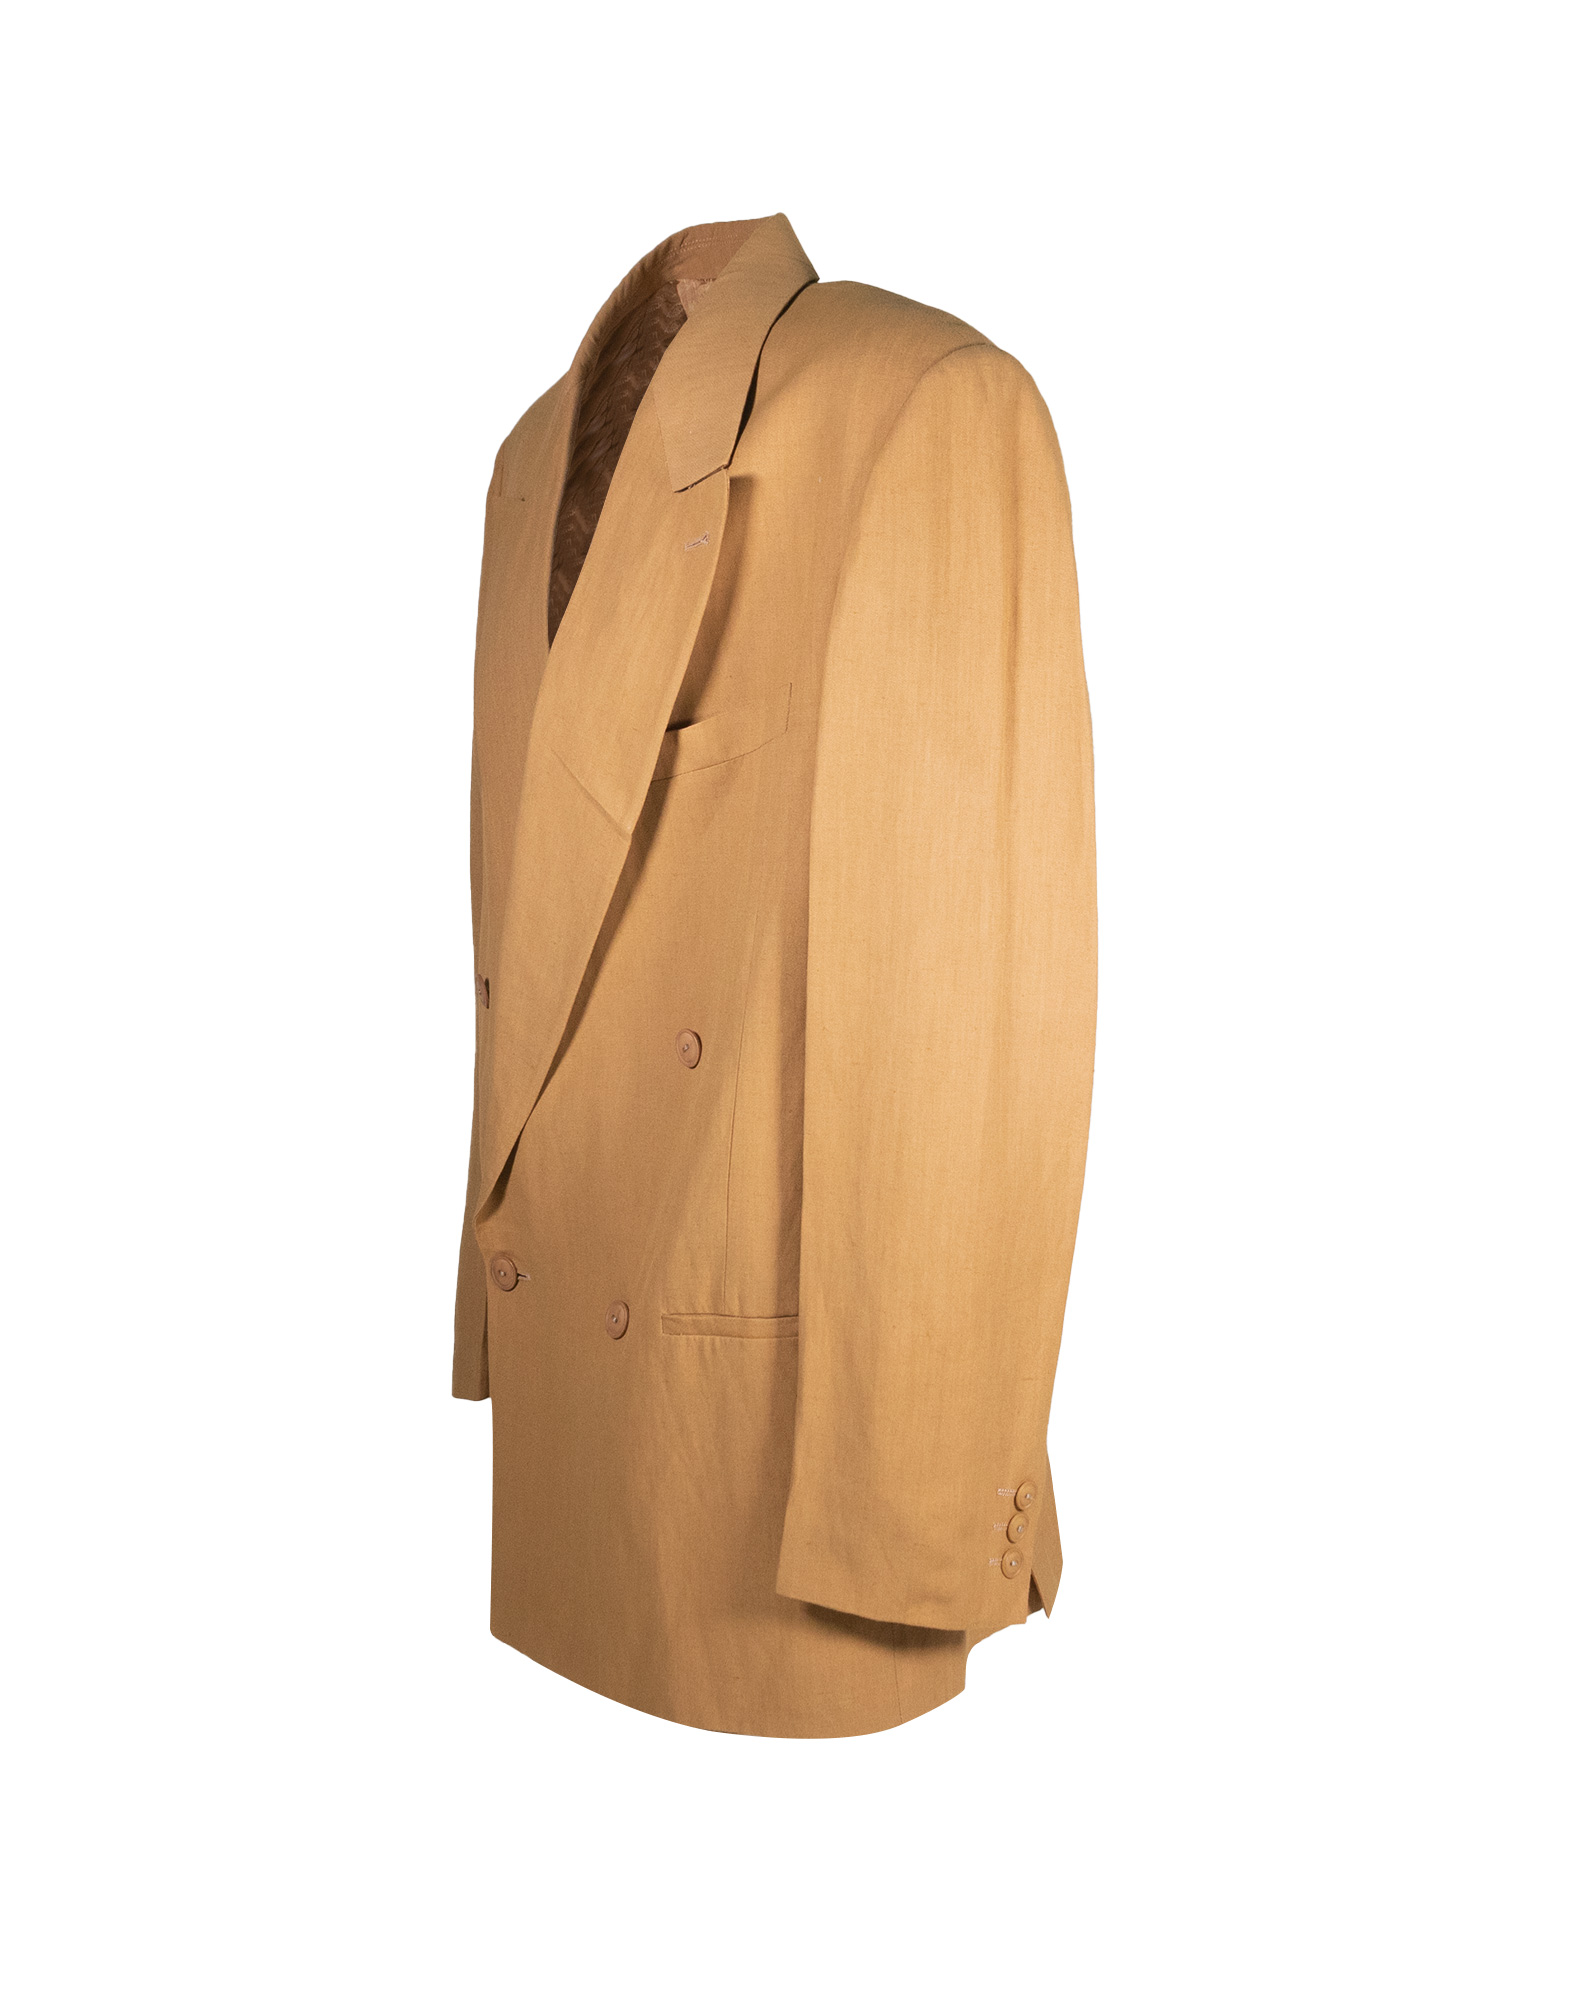 Byblos - Vintage linen and viscose blazer